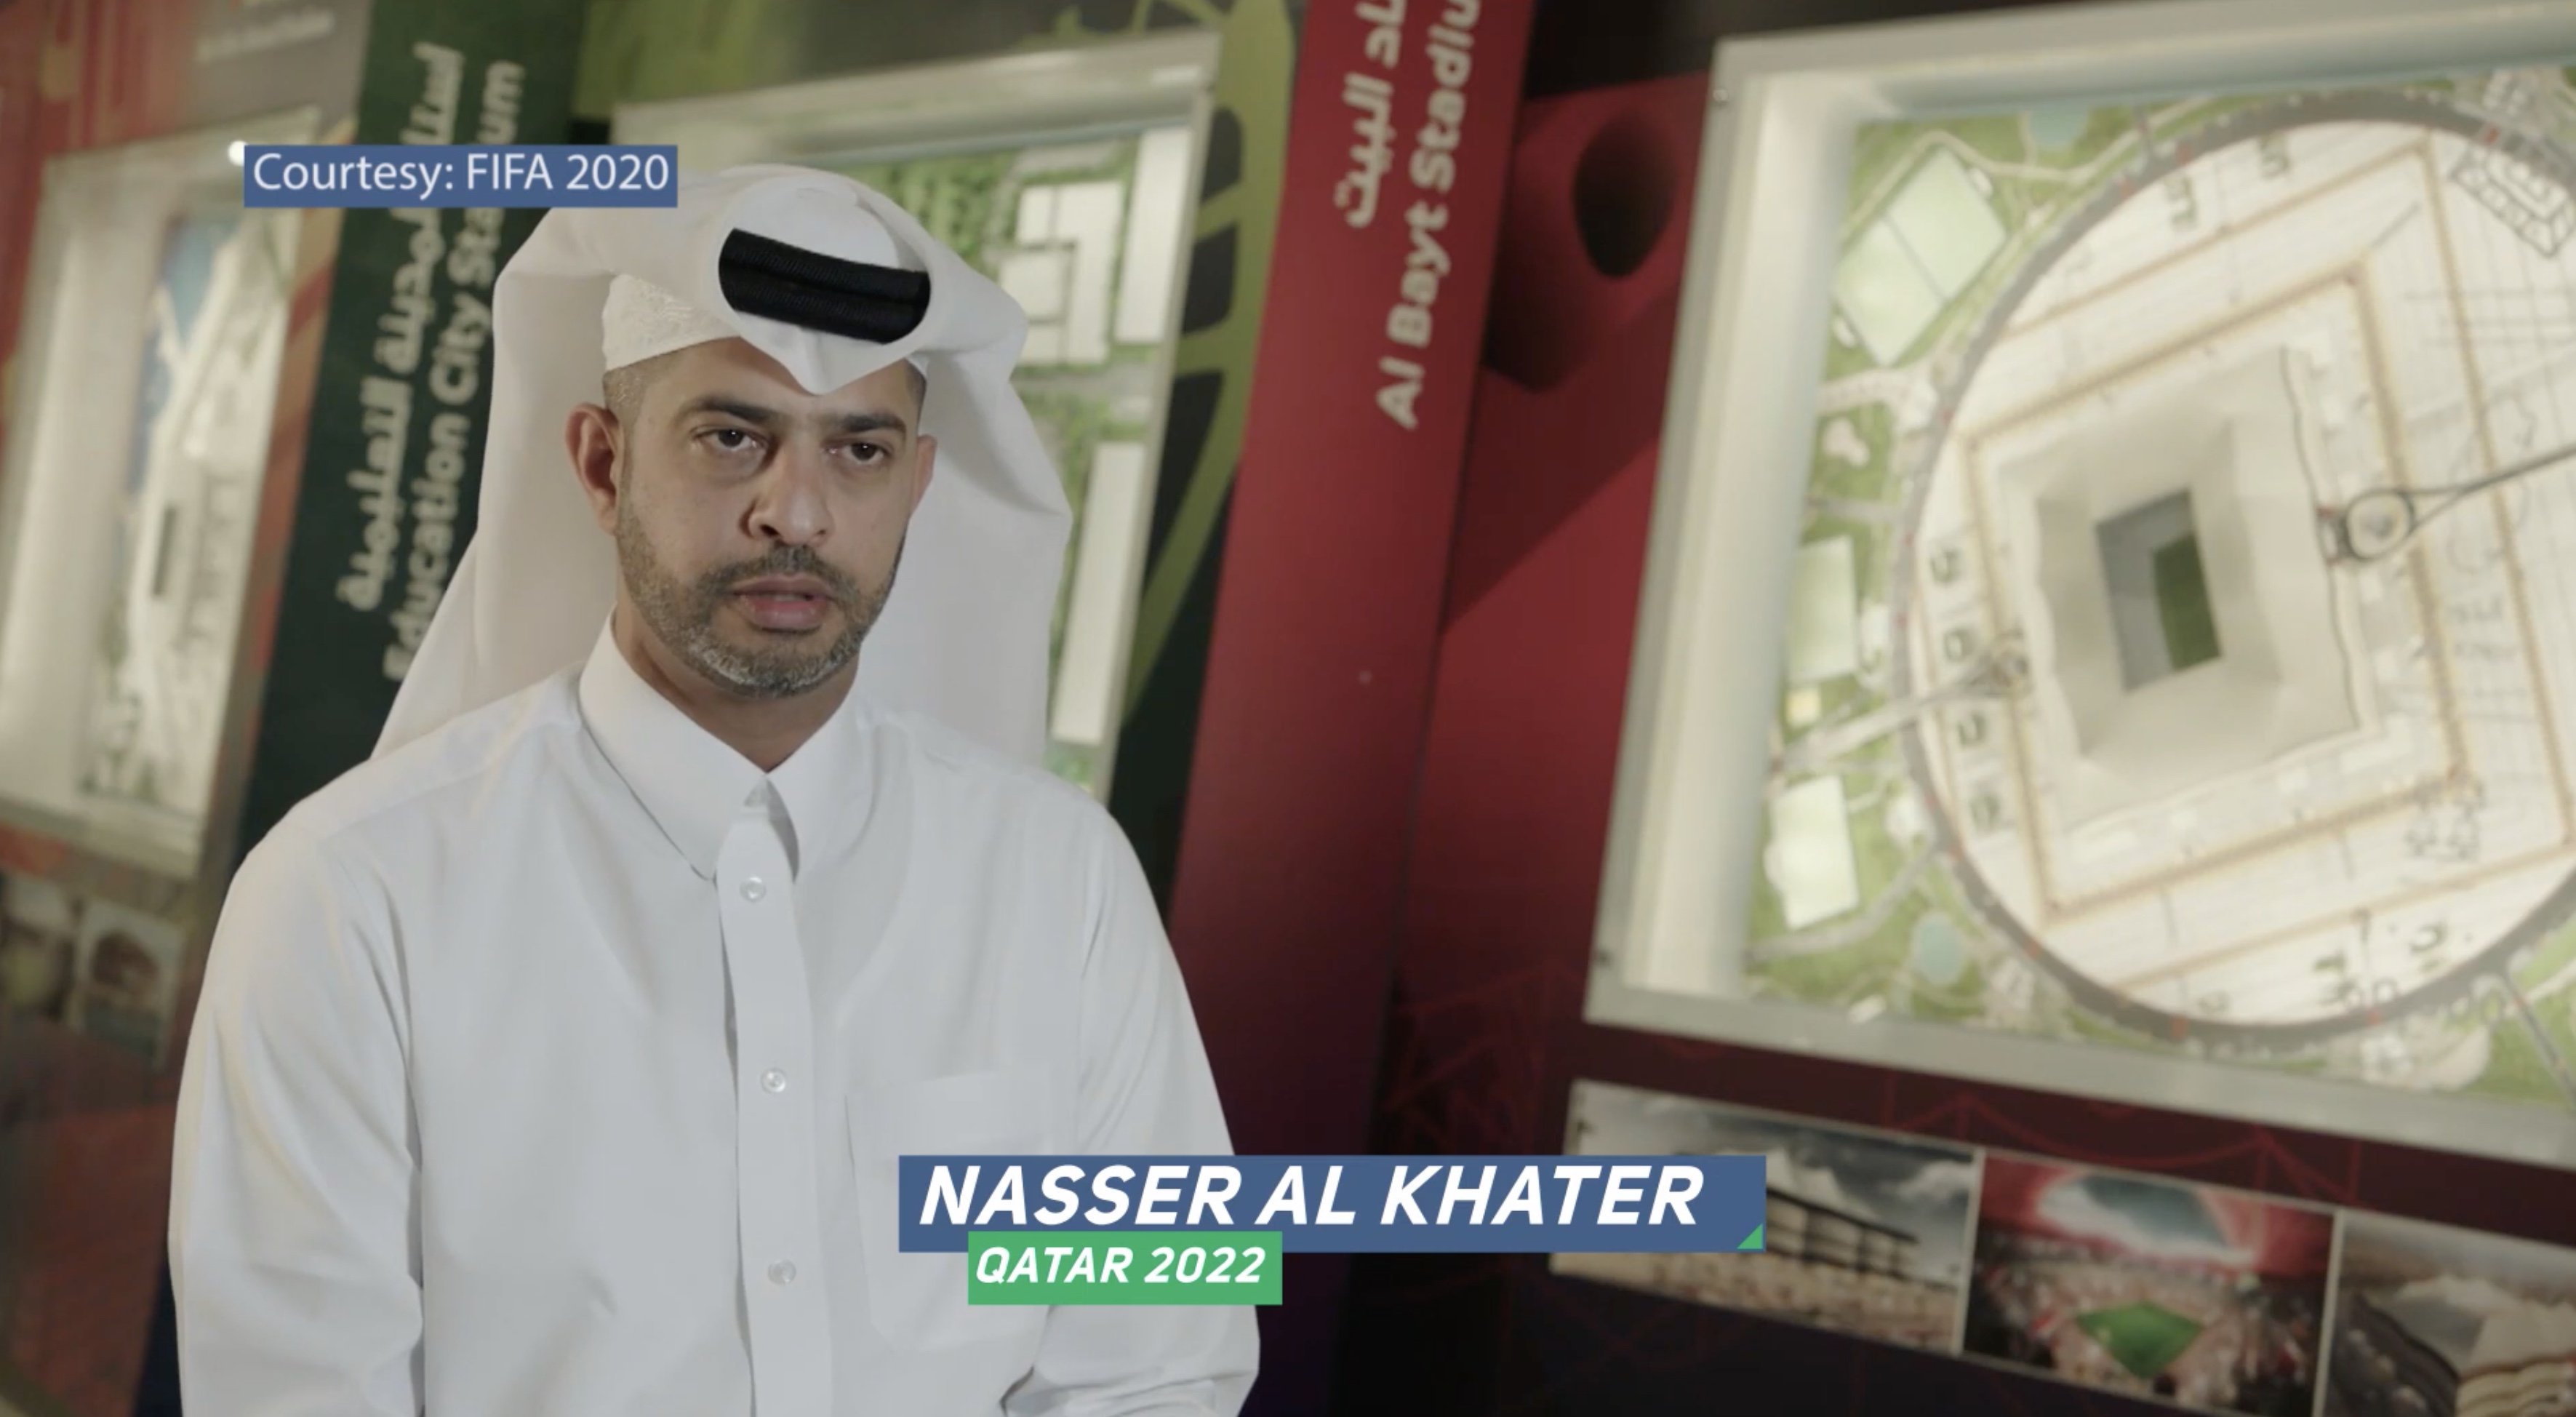 Qatar 2022, Nasser al Khater